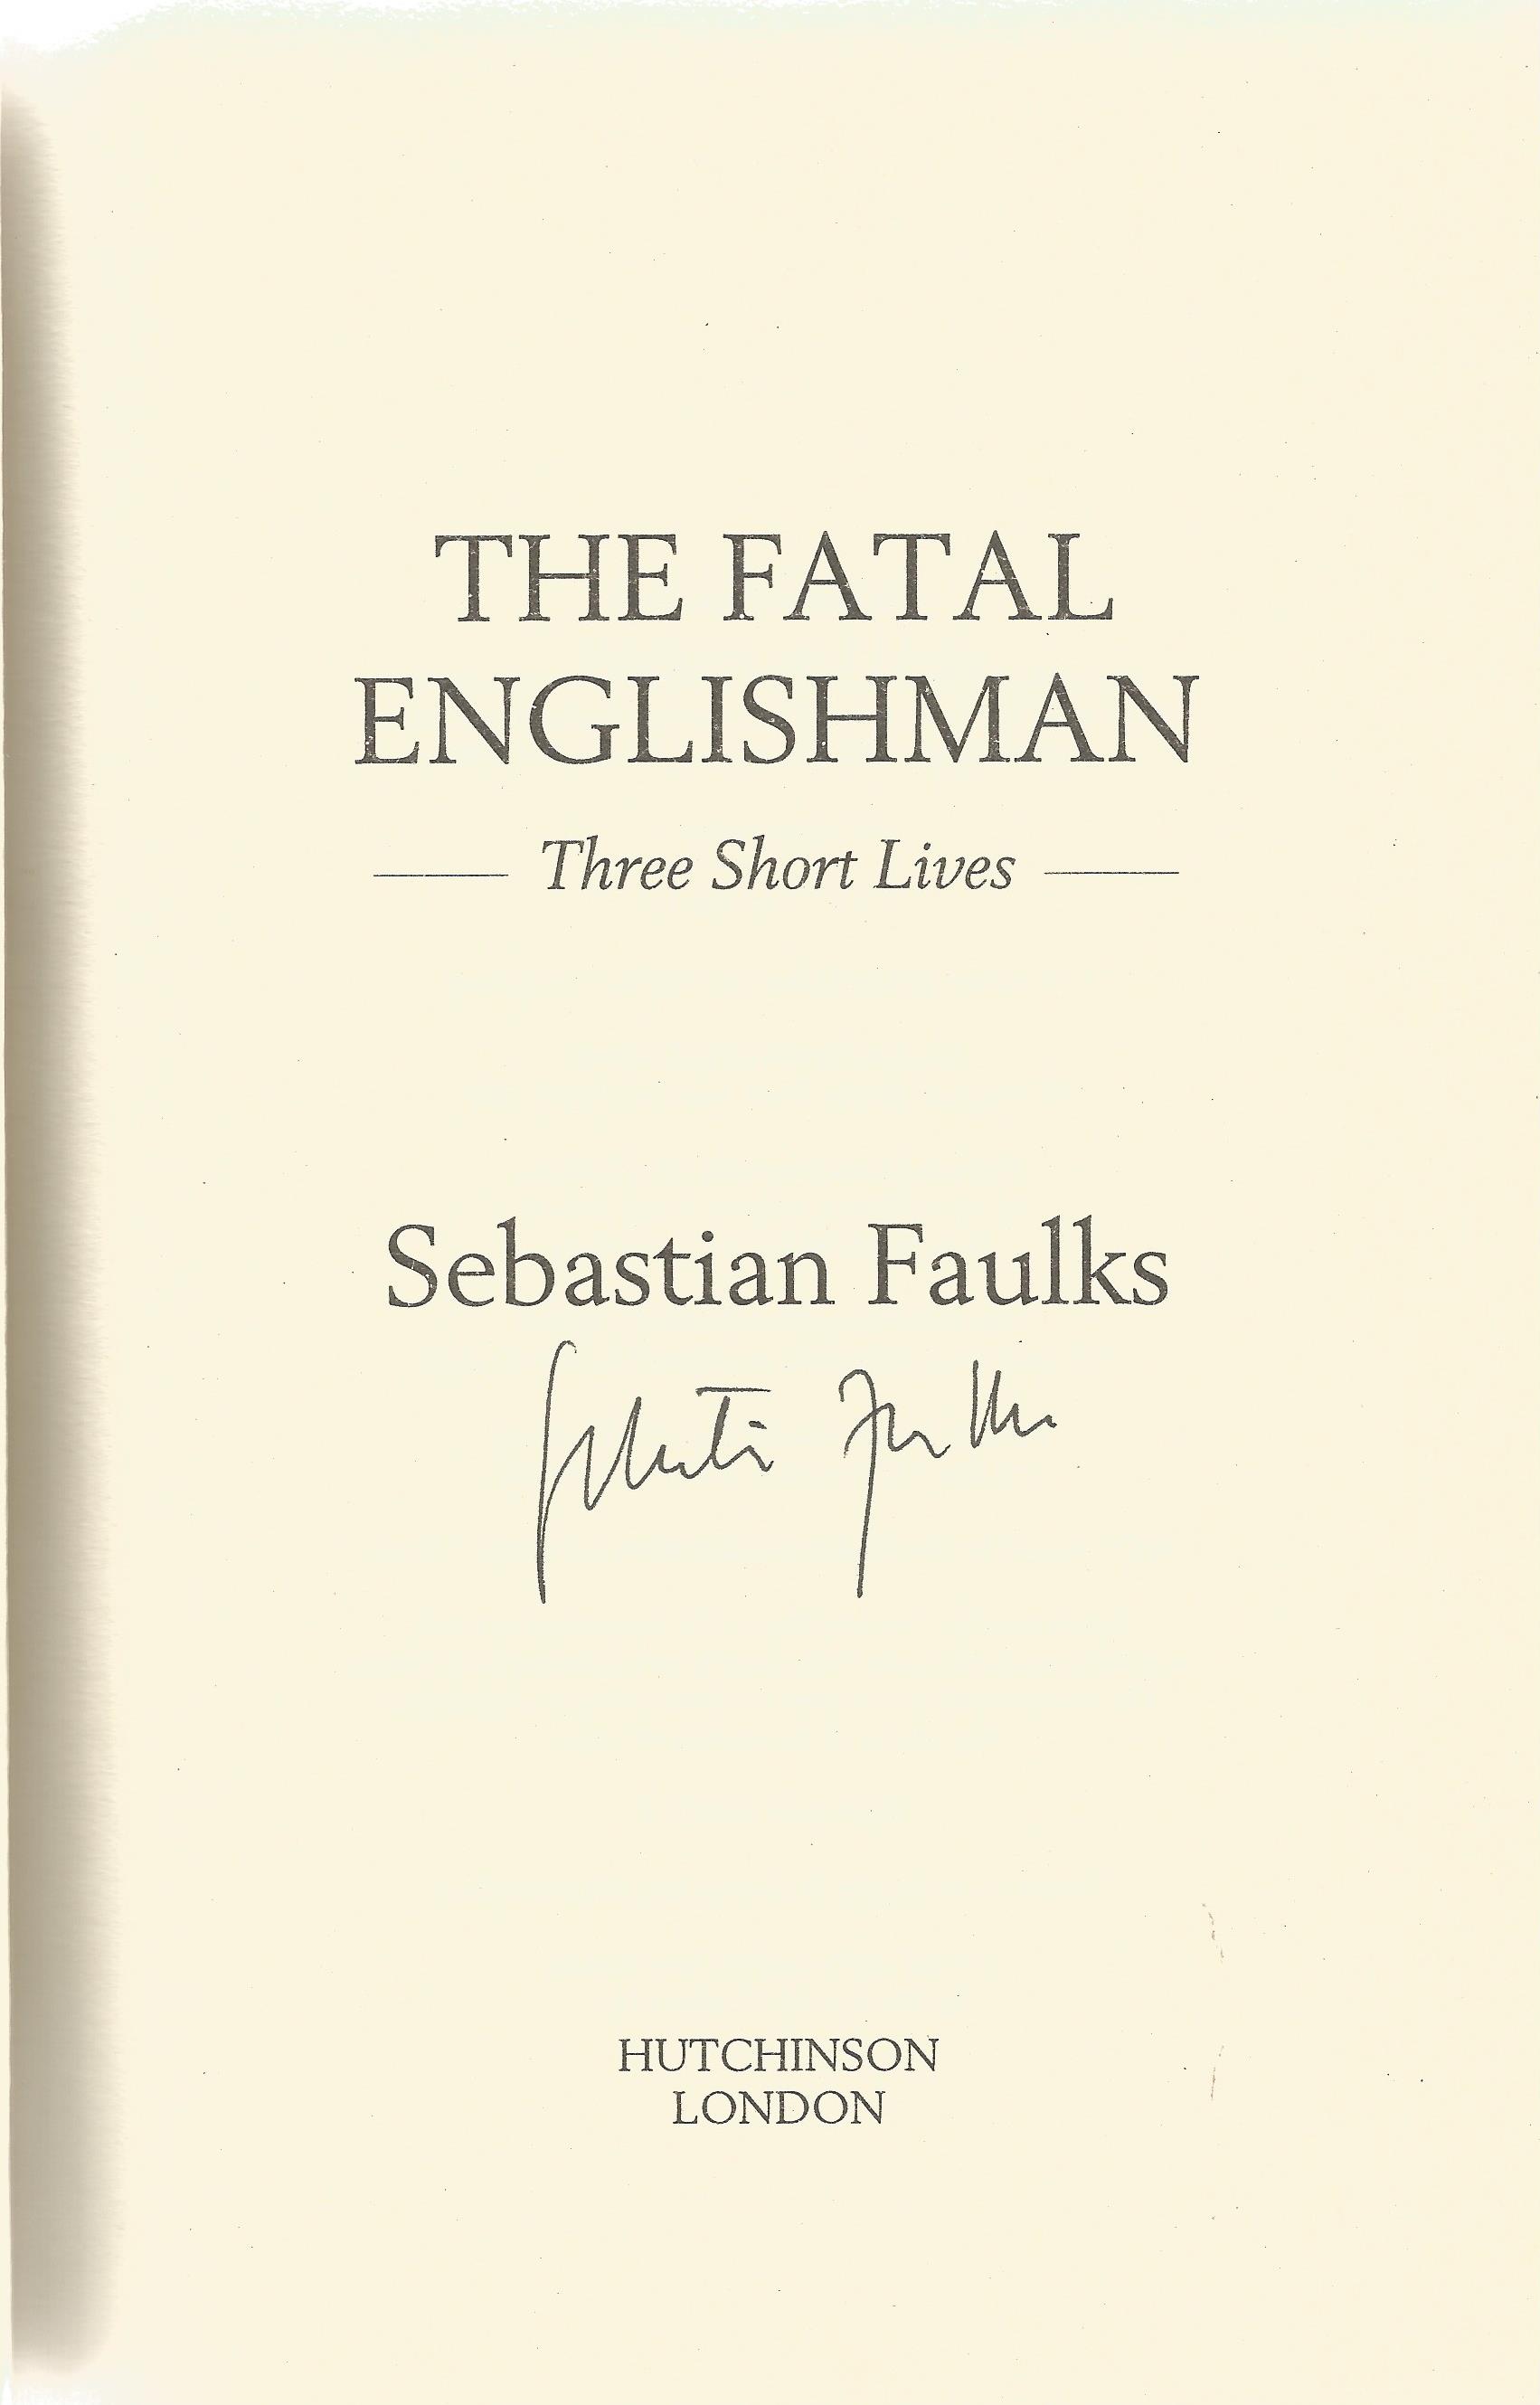 Sebastian Faulks Hardback Book The Fatal Englishman - Three short Lives signed by the Author on - Image 2 of 2